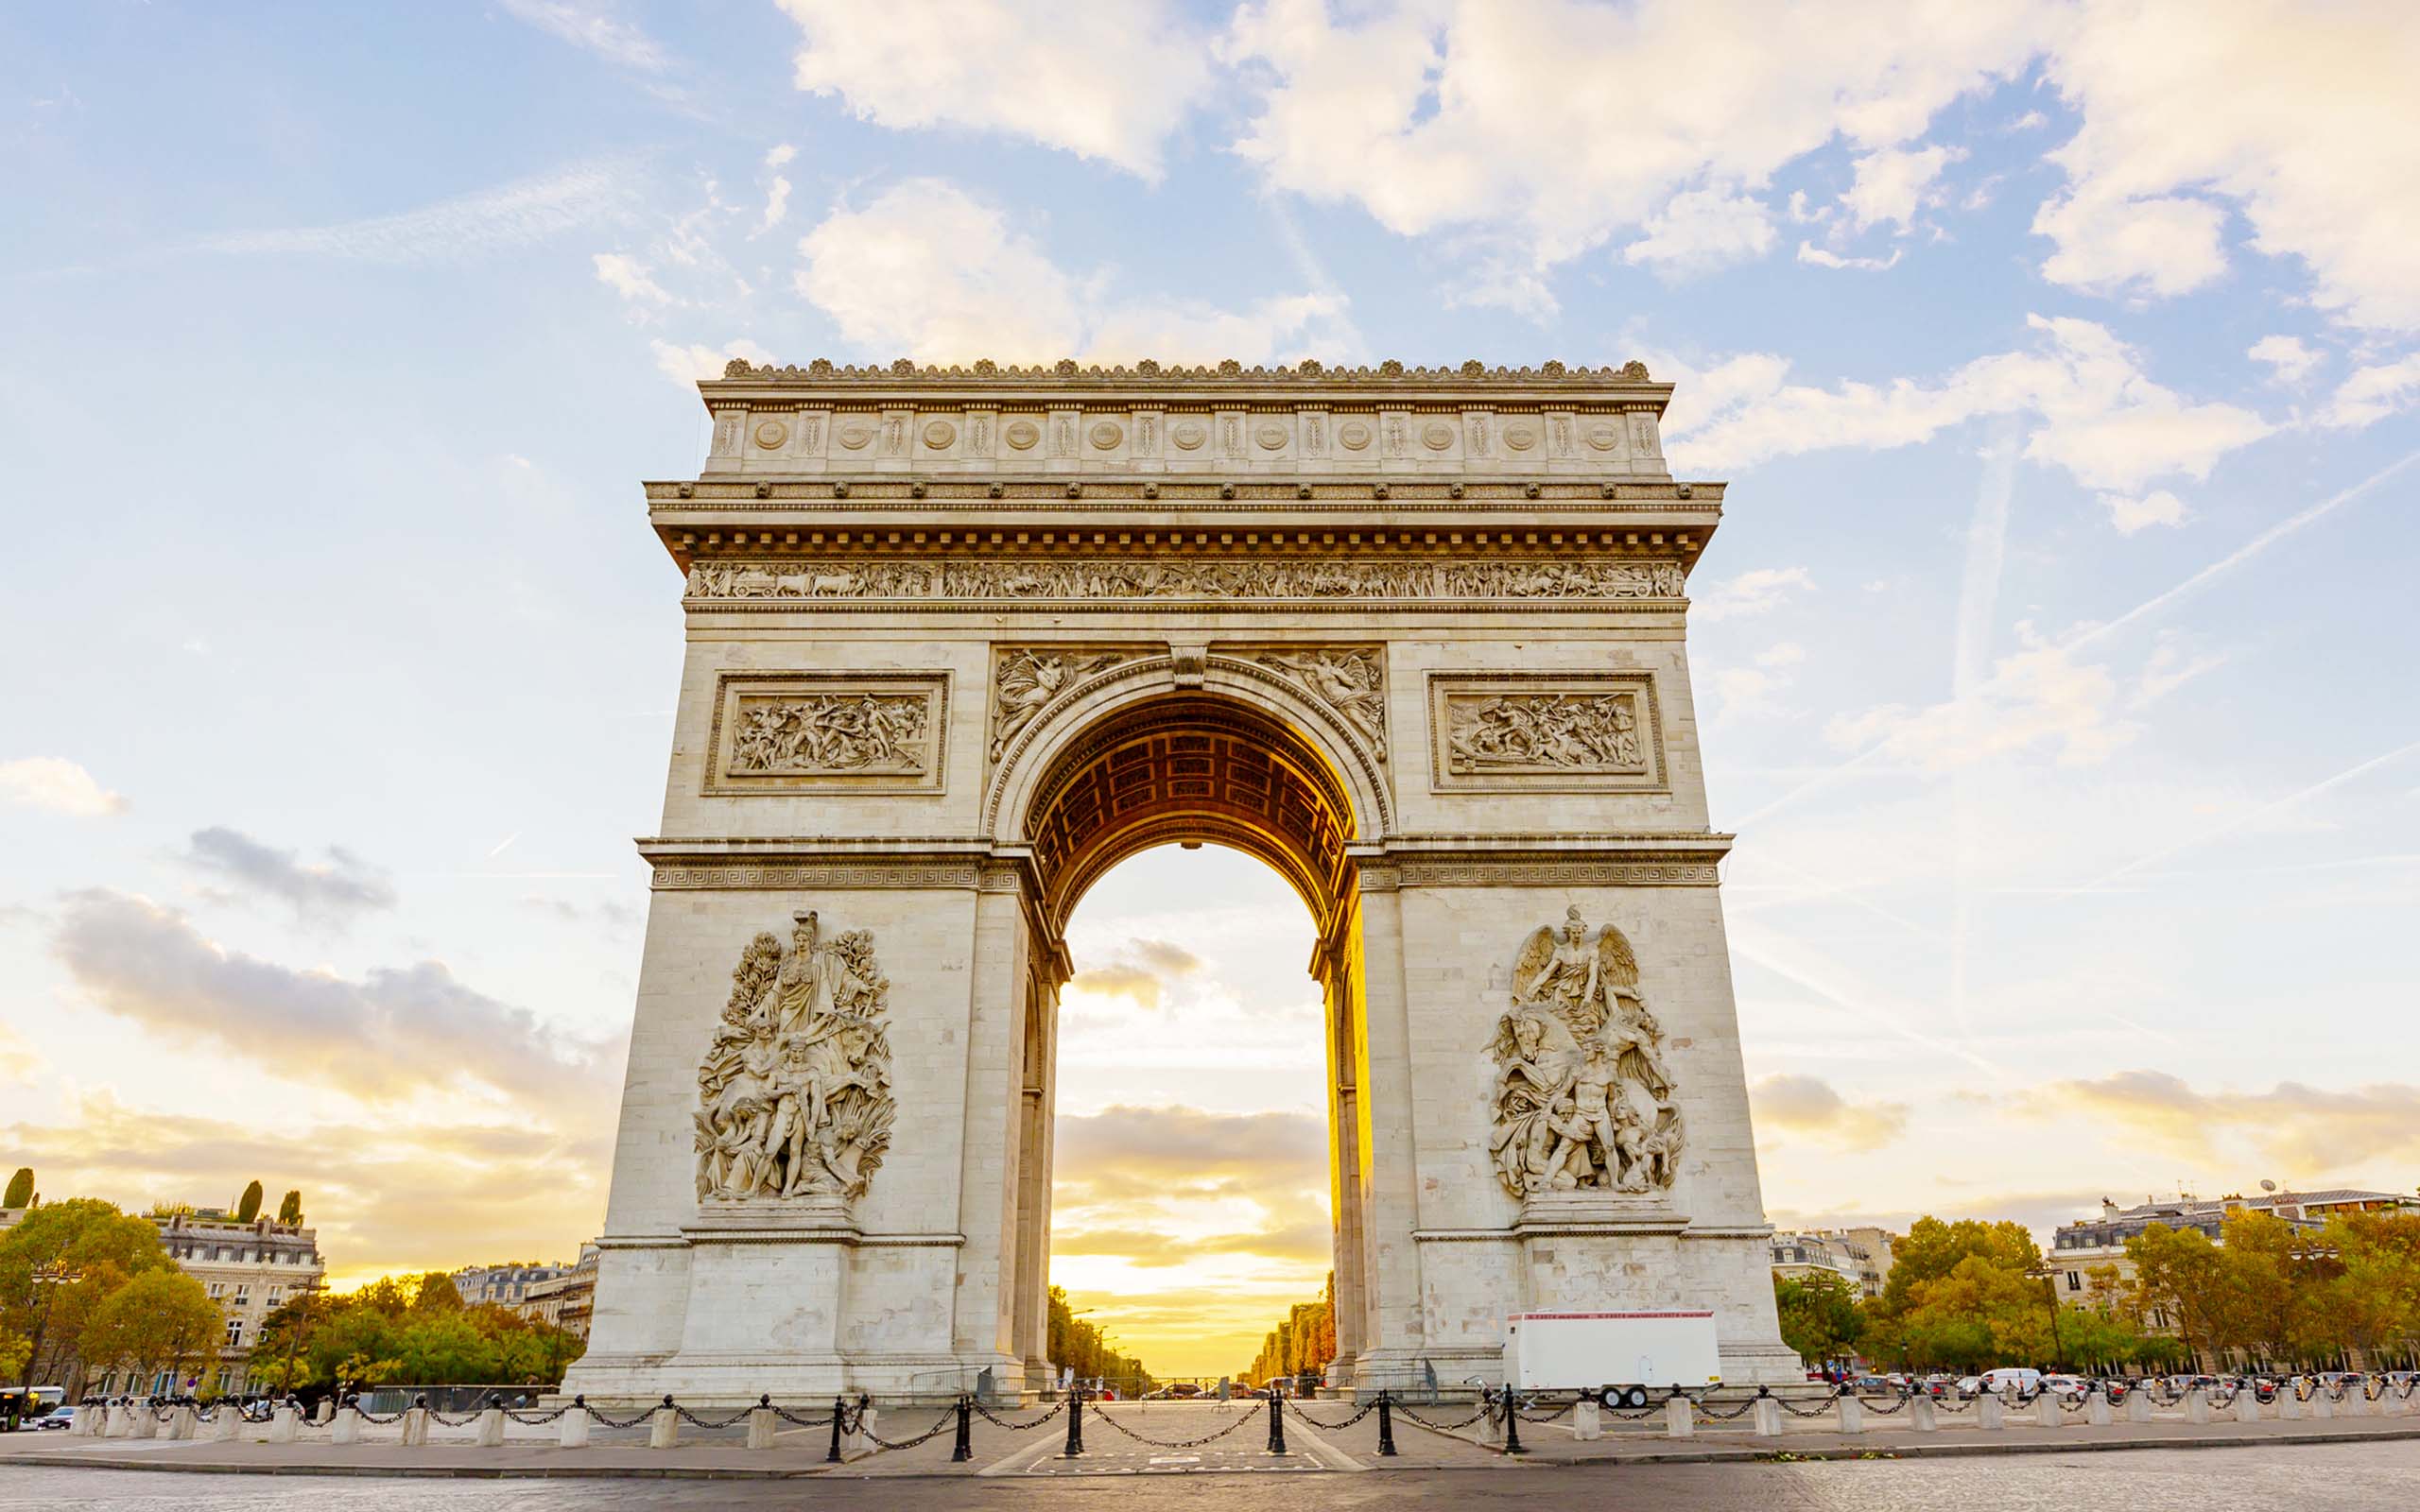 Visit the Champs Elysees in Paris